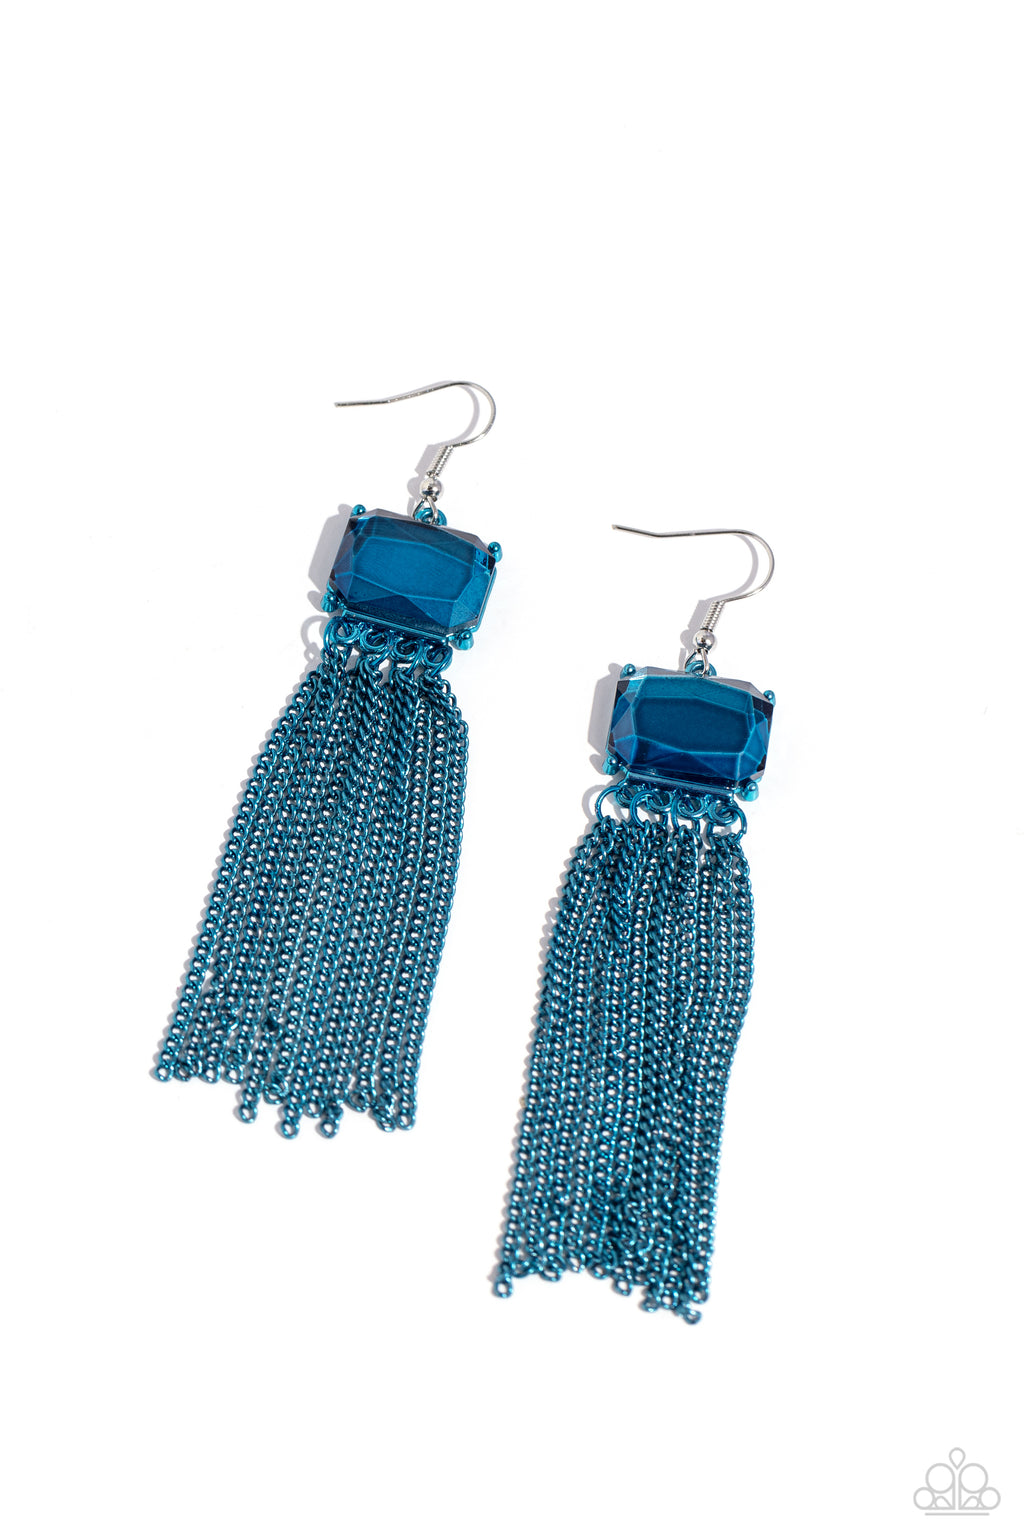 five-dollar-jewelry-dreaming-of-tassels-blue-earrings-paparazzi-accessories